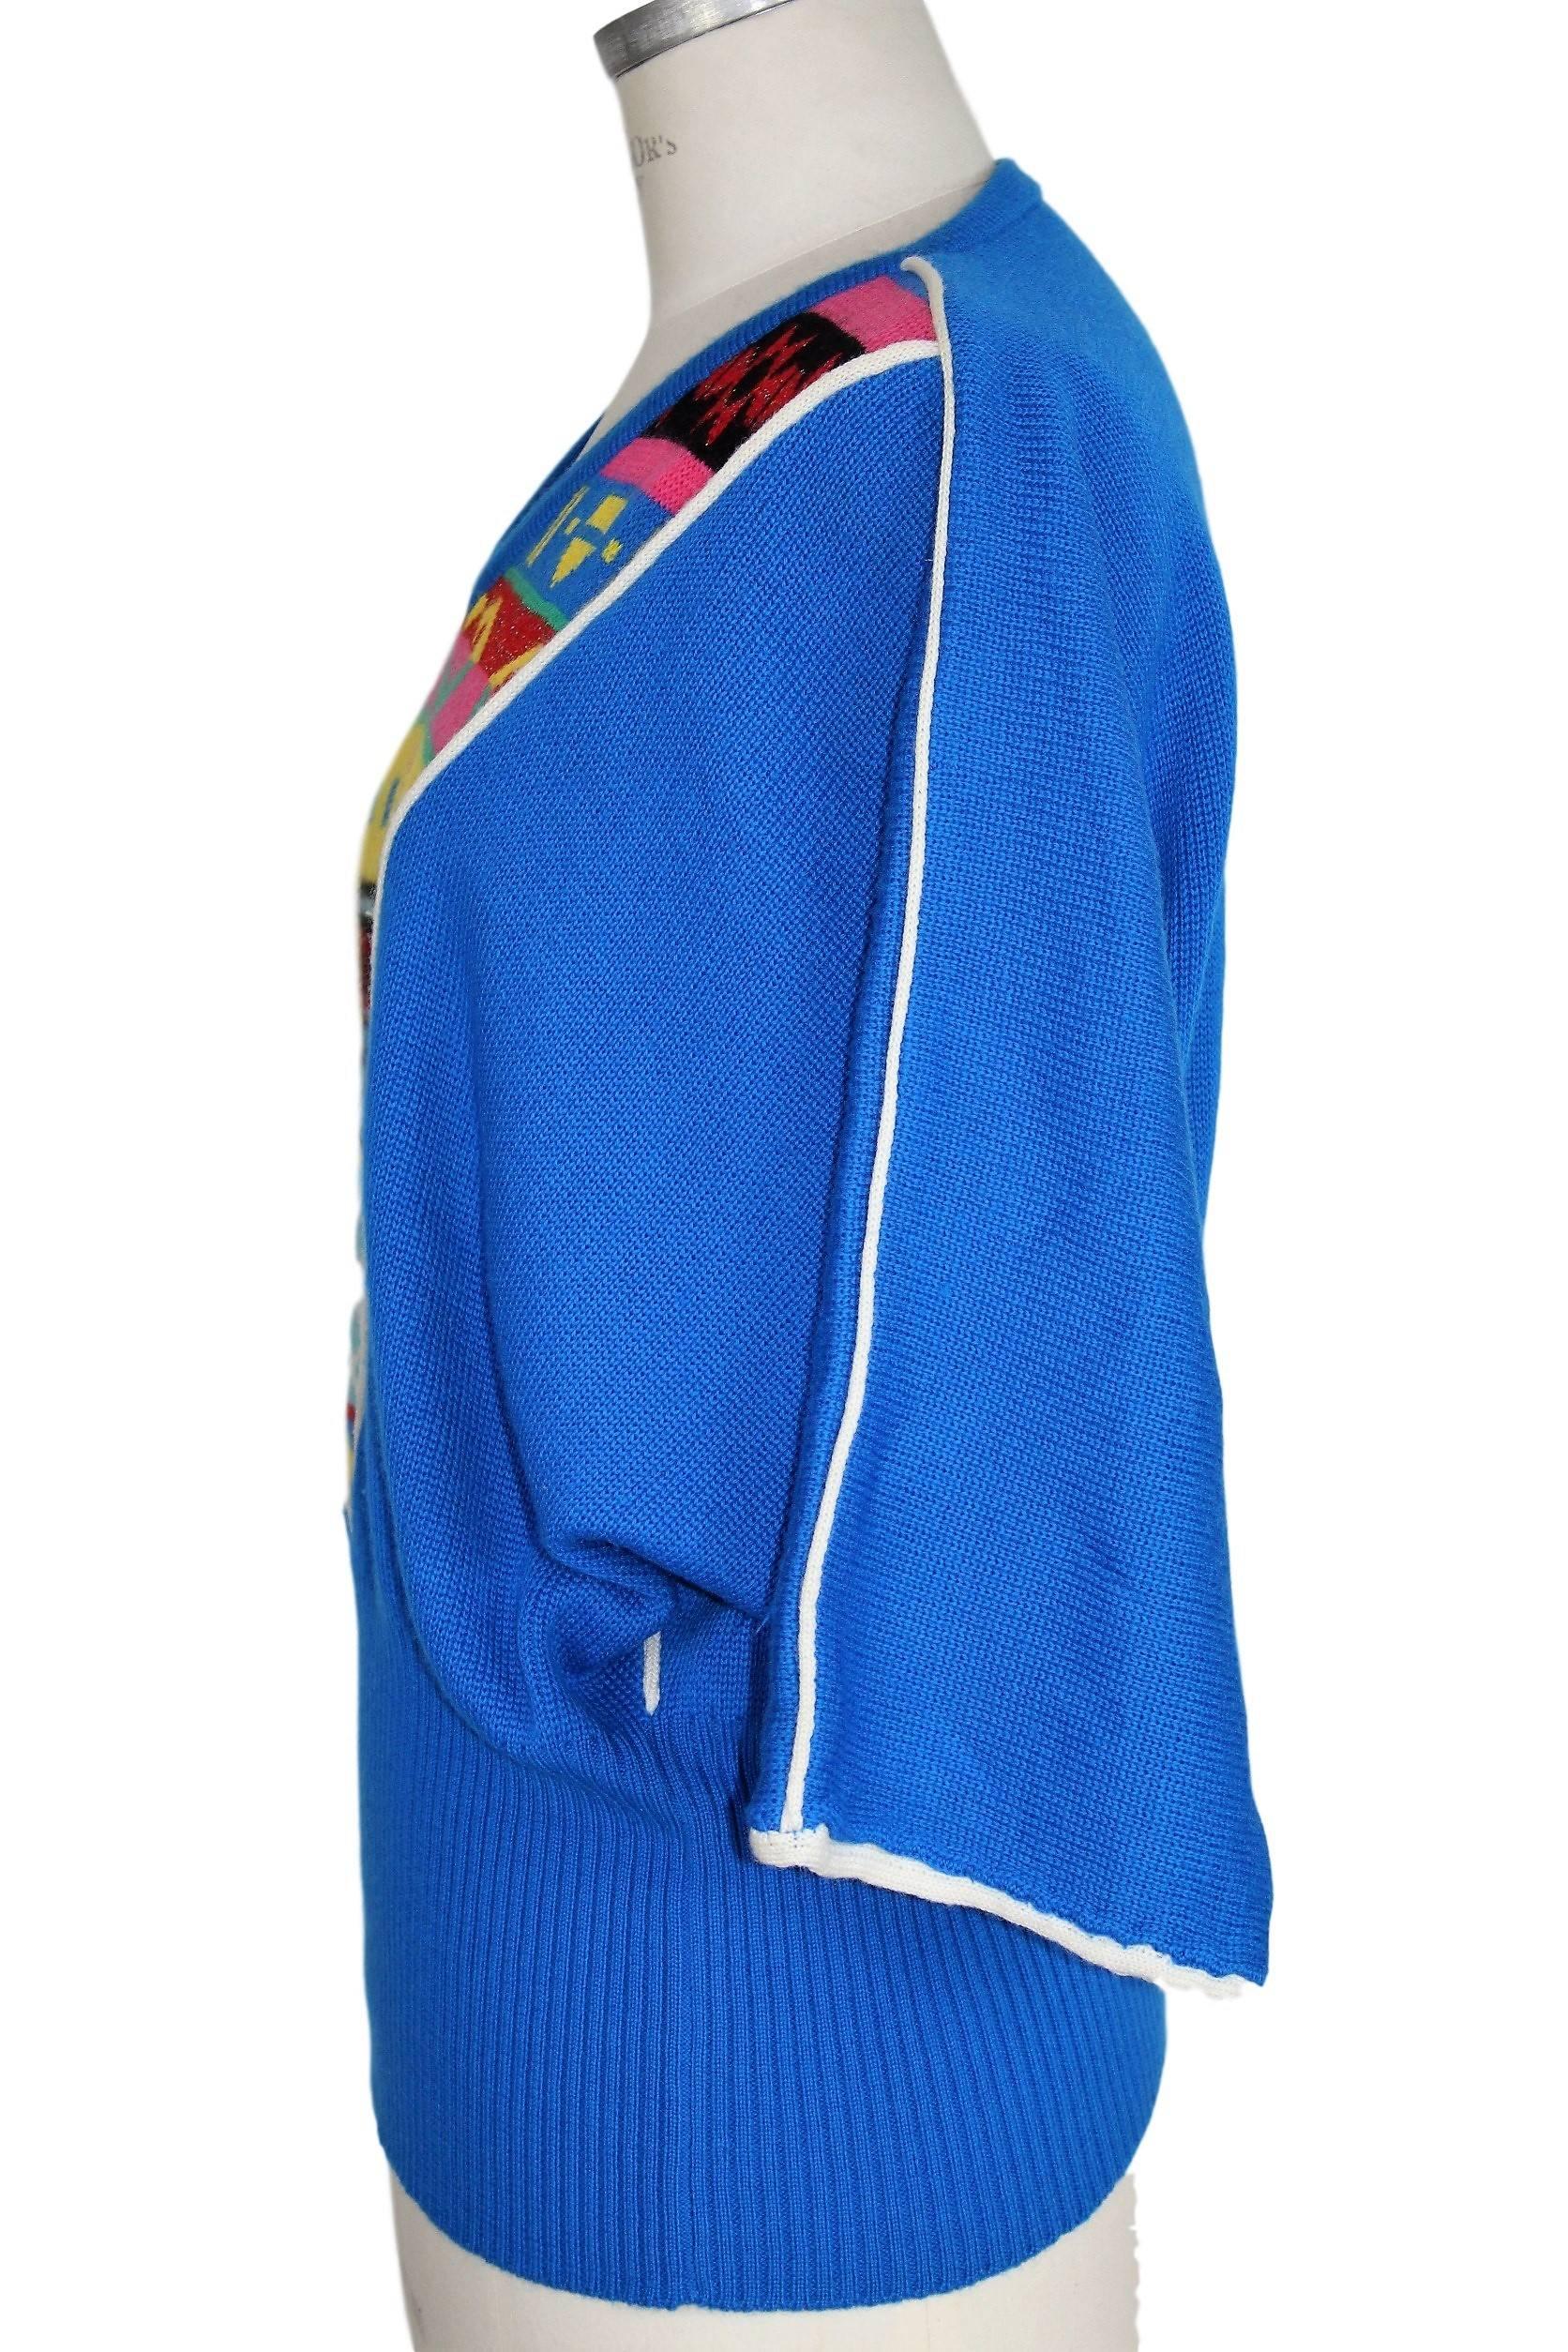 Pierre Cardin Paris Batwing Blue V-Neck Sweater, 1980 For Sale 1